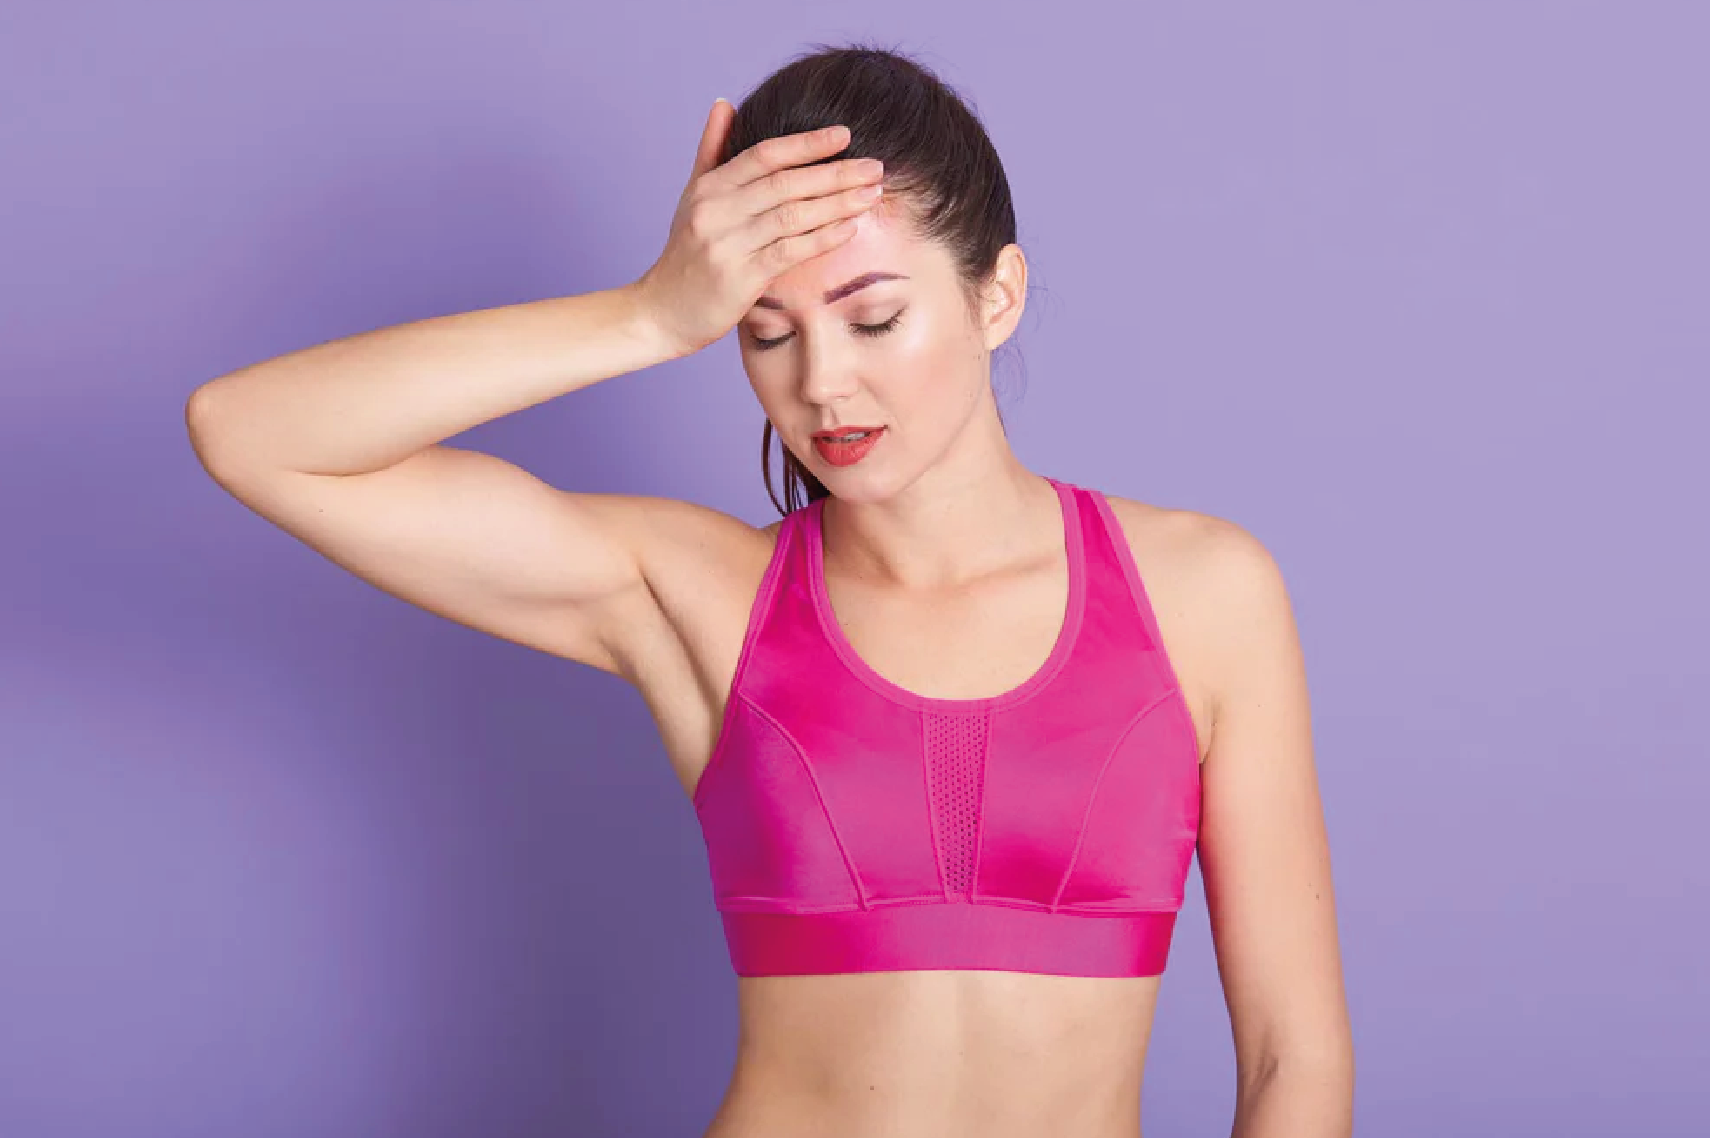 Hand on head in pink sports bra